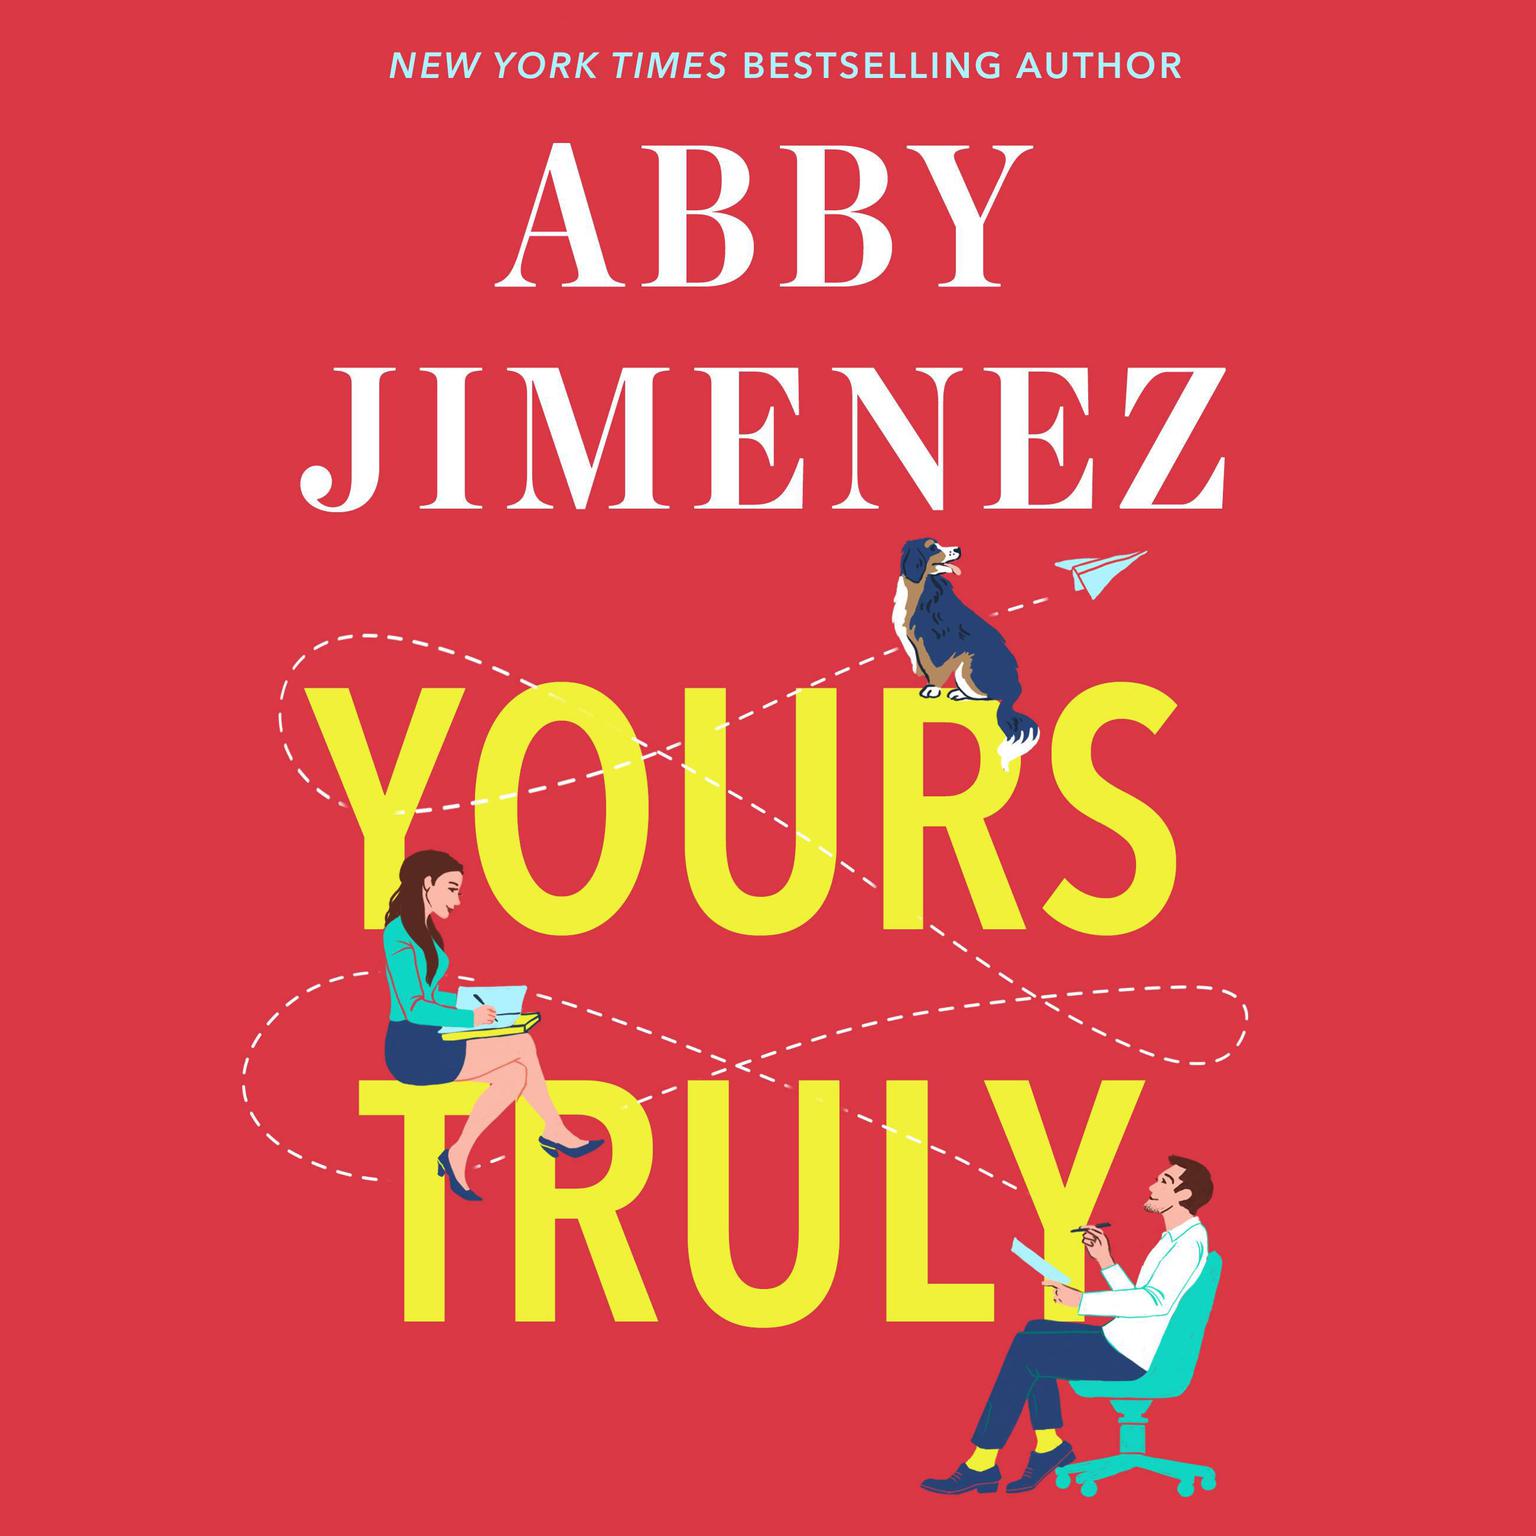 Yours Truly Audiobook, by Abby Jimenez